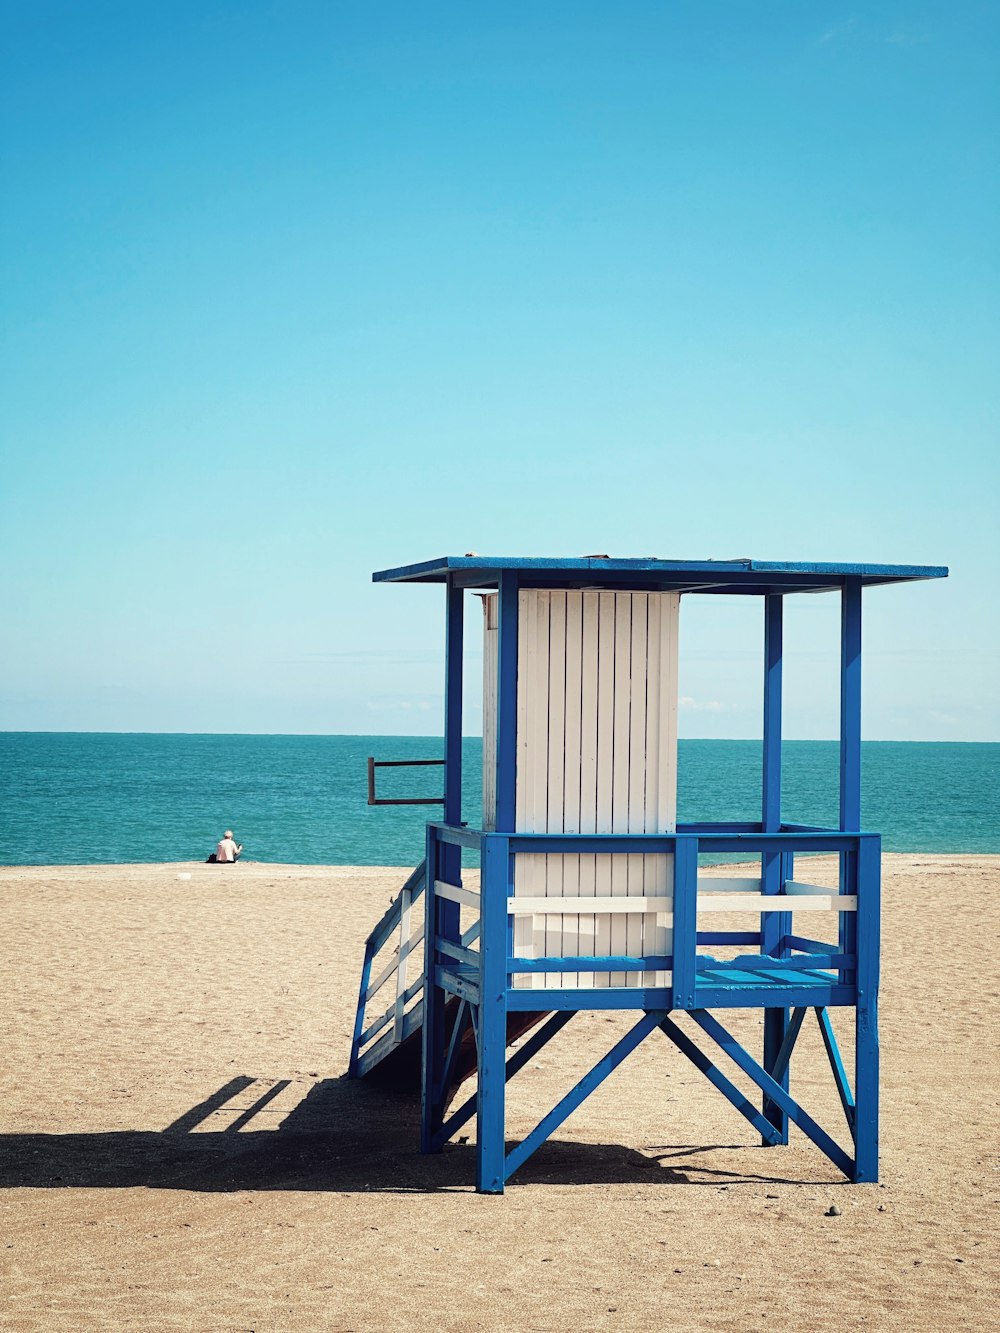 a blue and white lifeguard chair on a beach